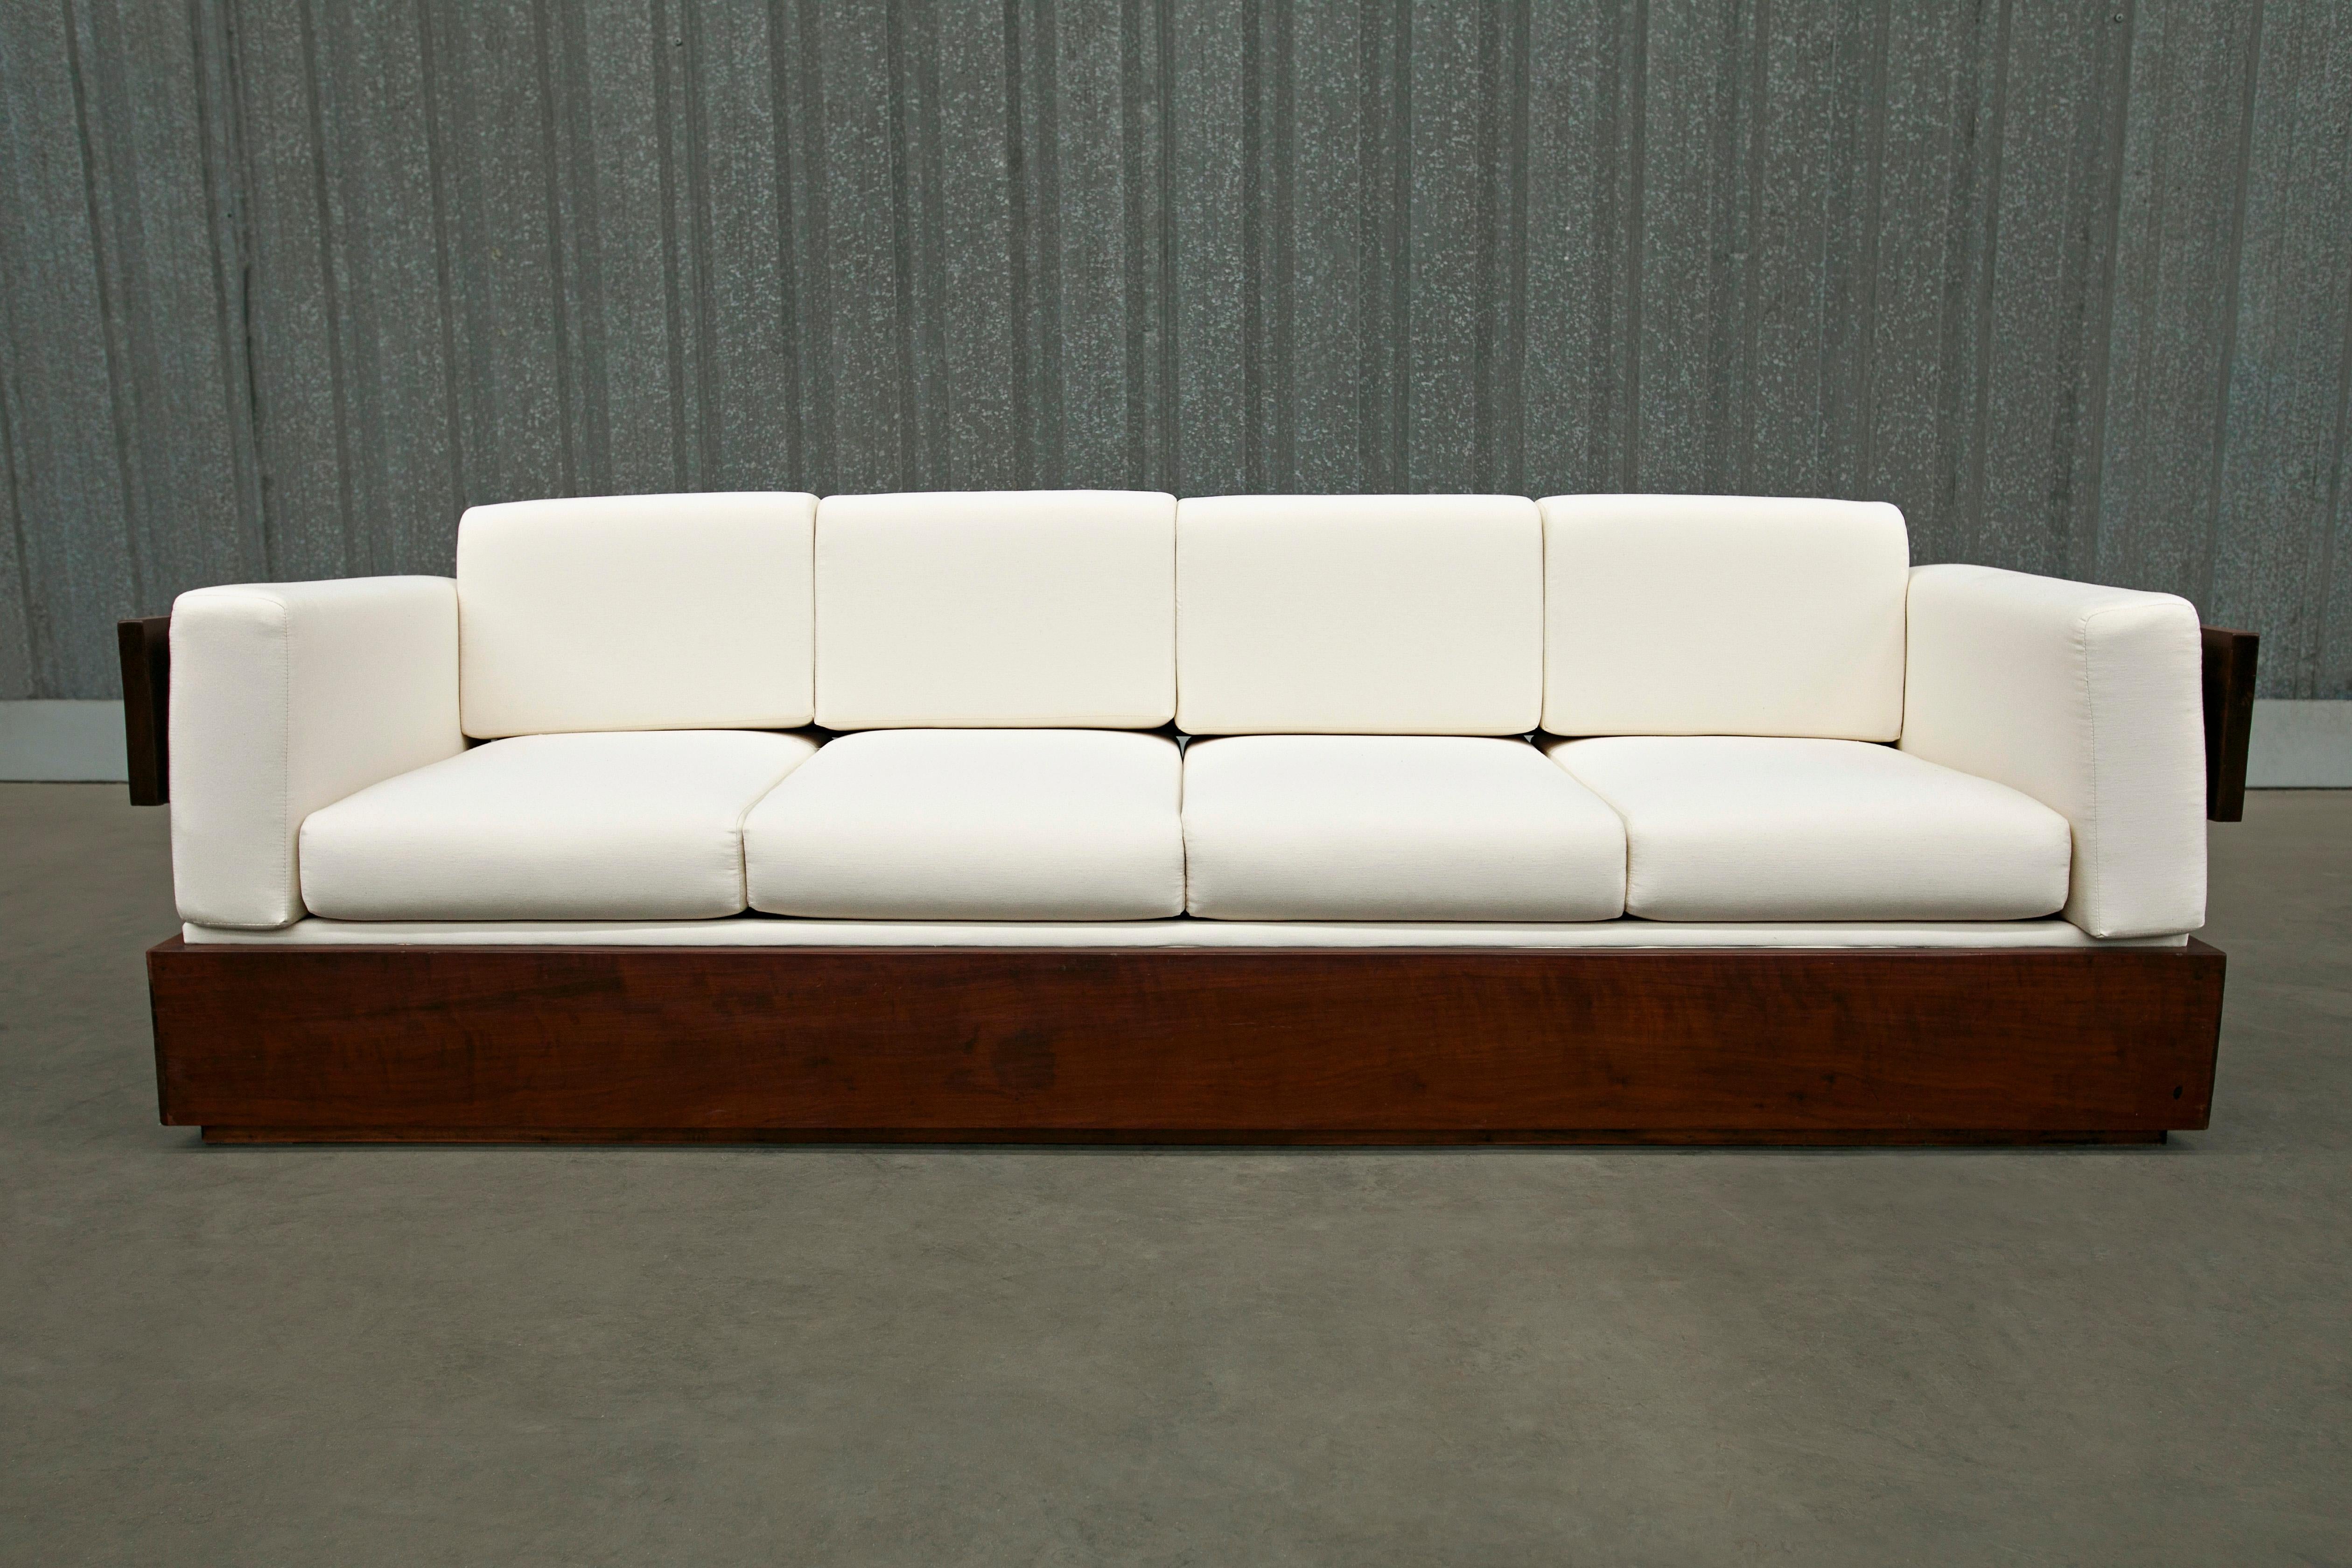 Brazilian Modern Sofa in Hardwood and White Linen by Celina, Brazil, c. 1960 For Sale 2